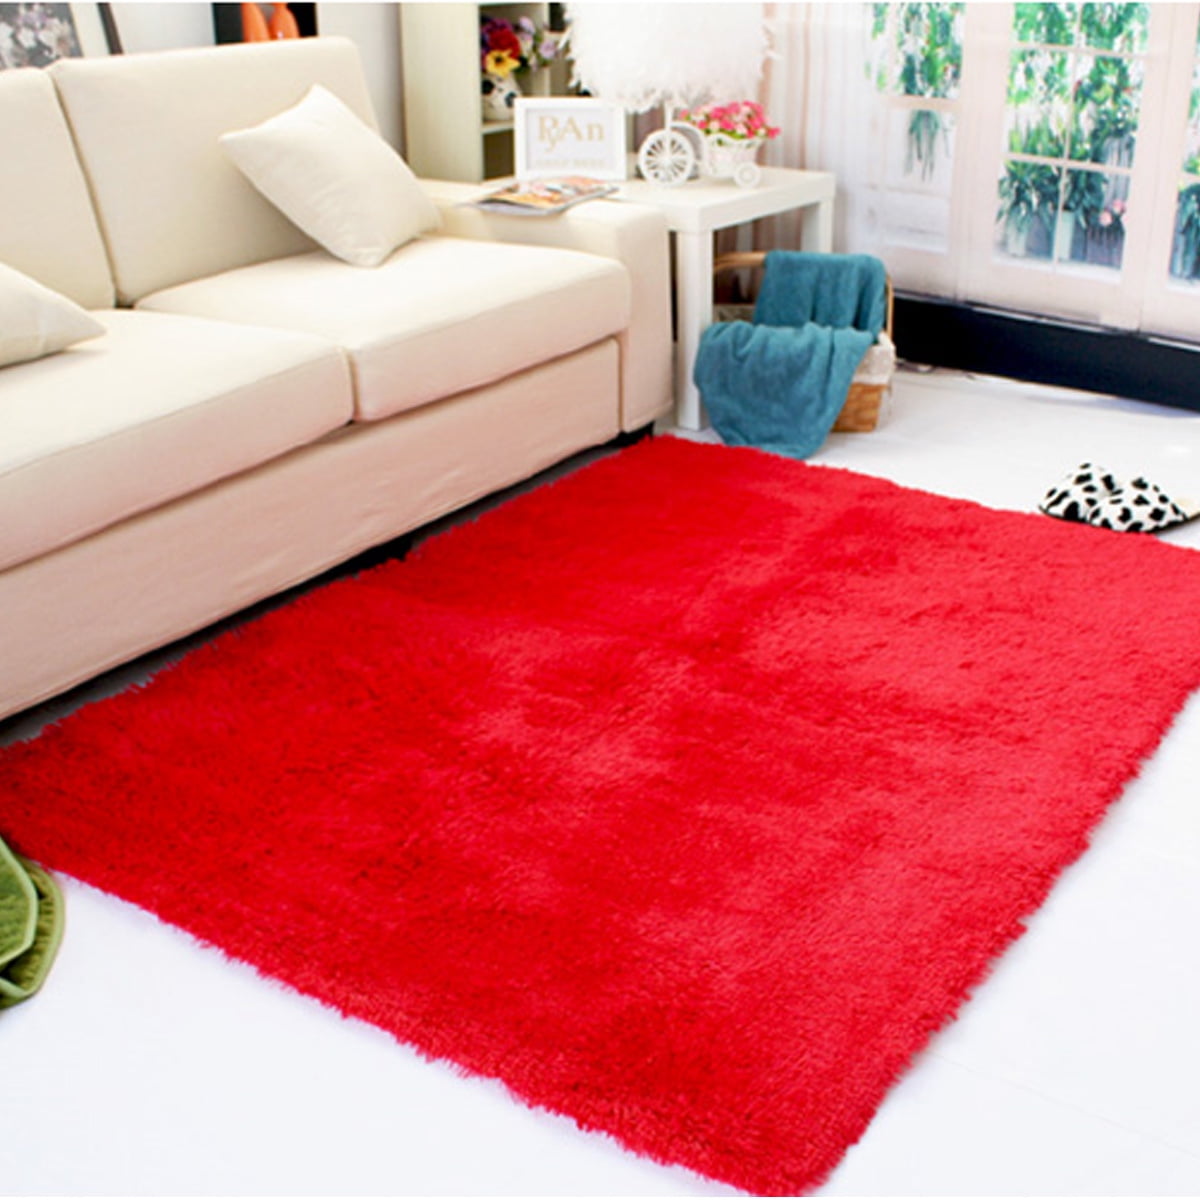 Light brown 6'x2' Bedroom Faux Fur Carpet Imitated Sheepskin Rug Washable Mat 